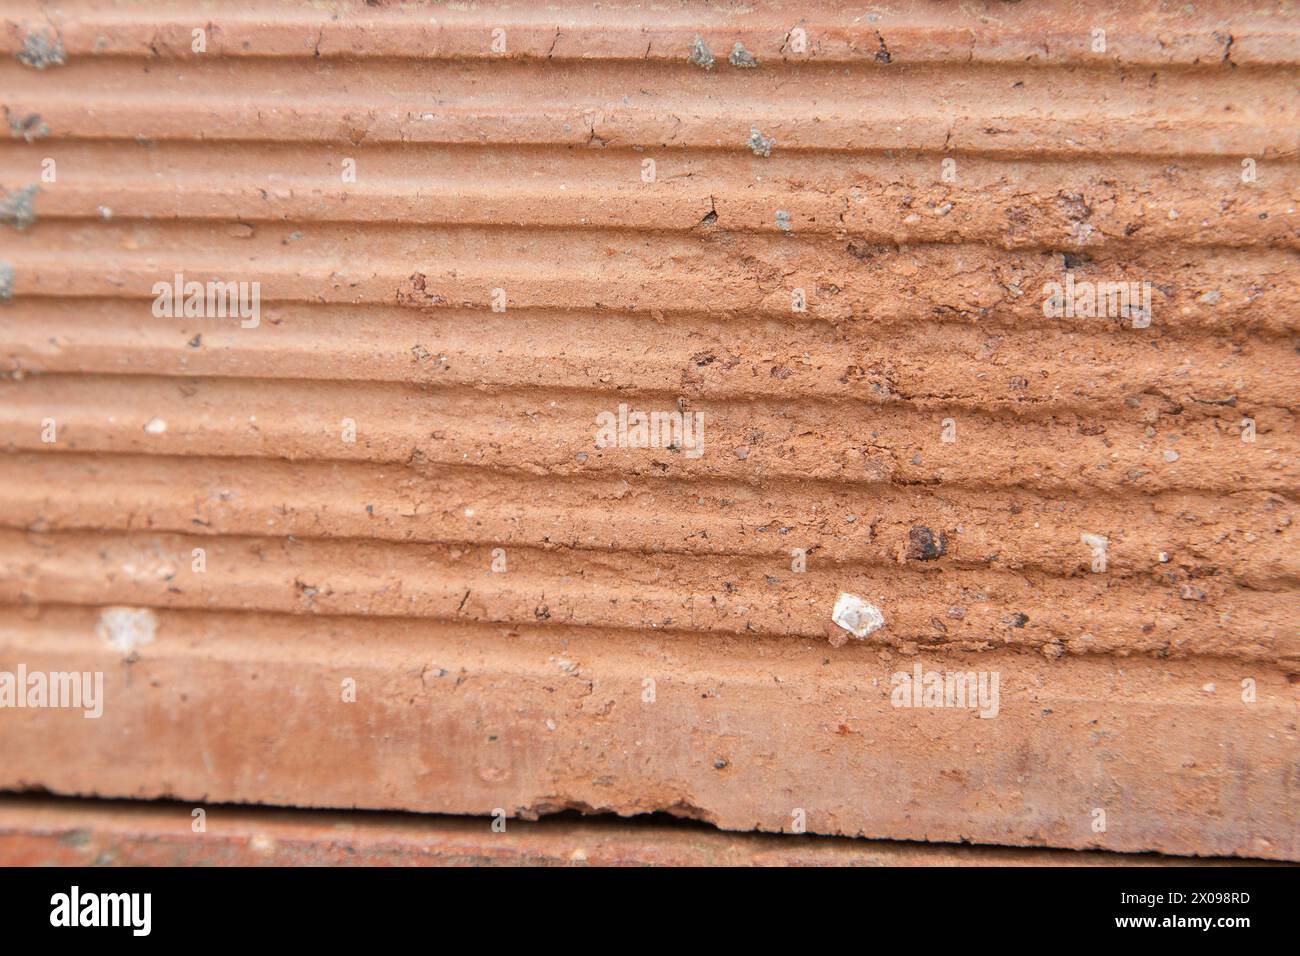 Detail of old, damaged orange tile. Textured background image. Stock Photo